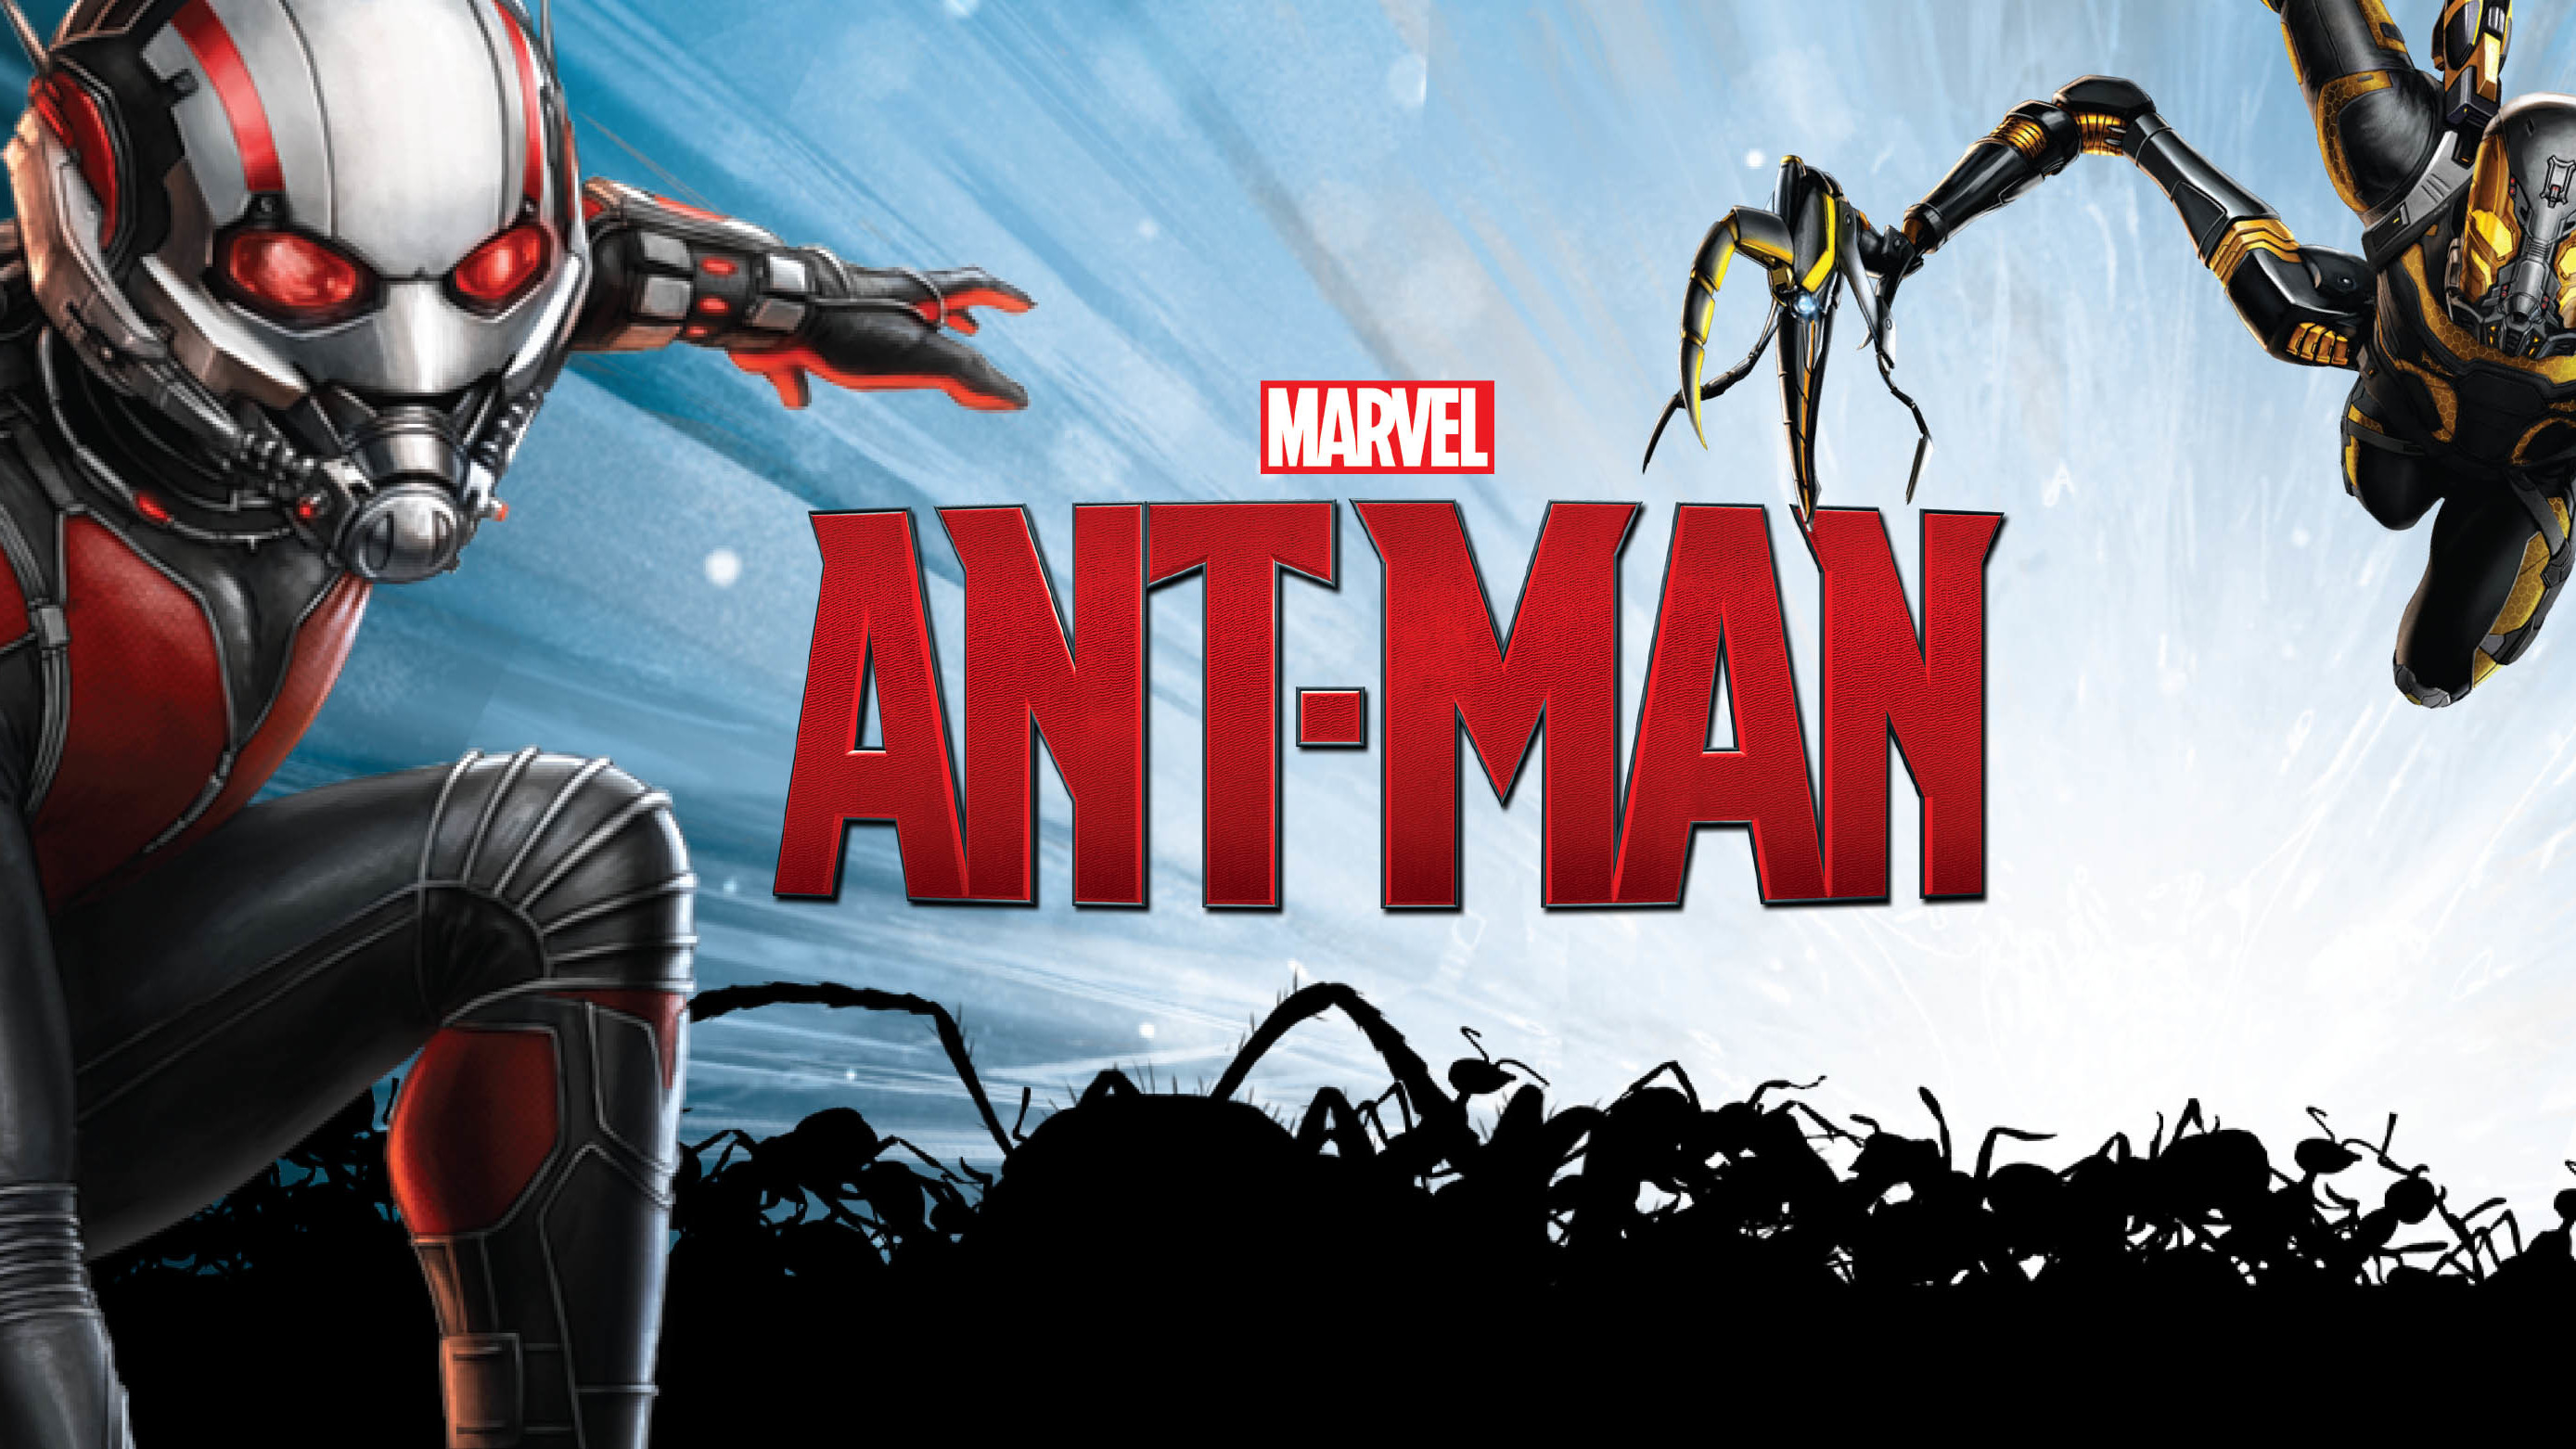 Eerste blik op Yellowjacket op banner 'Ant-Man'